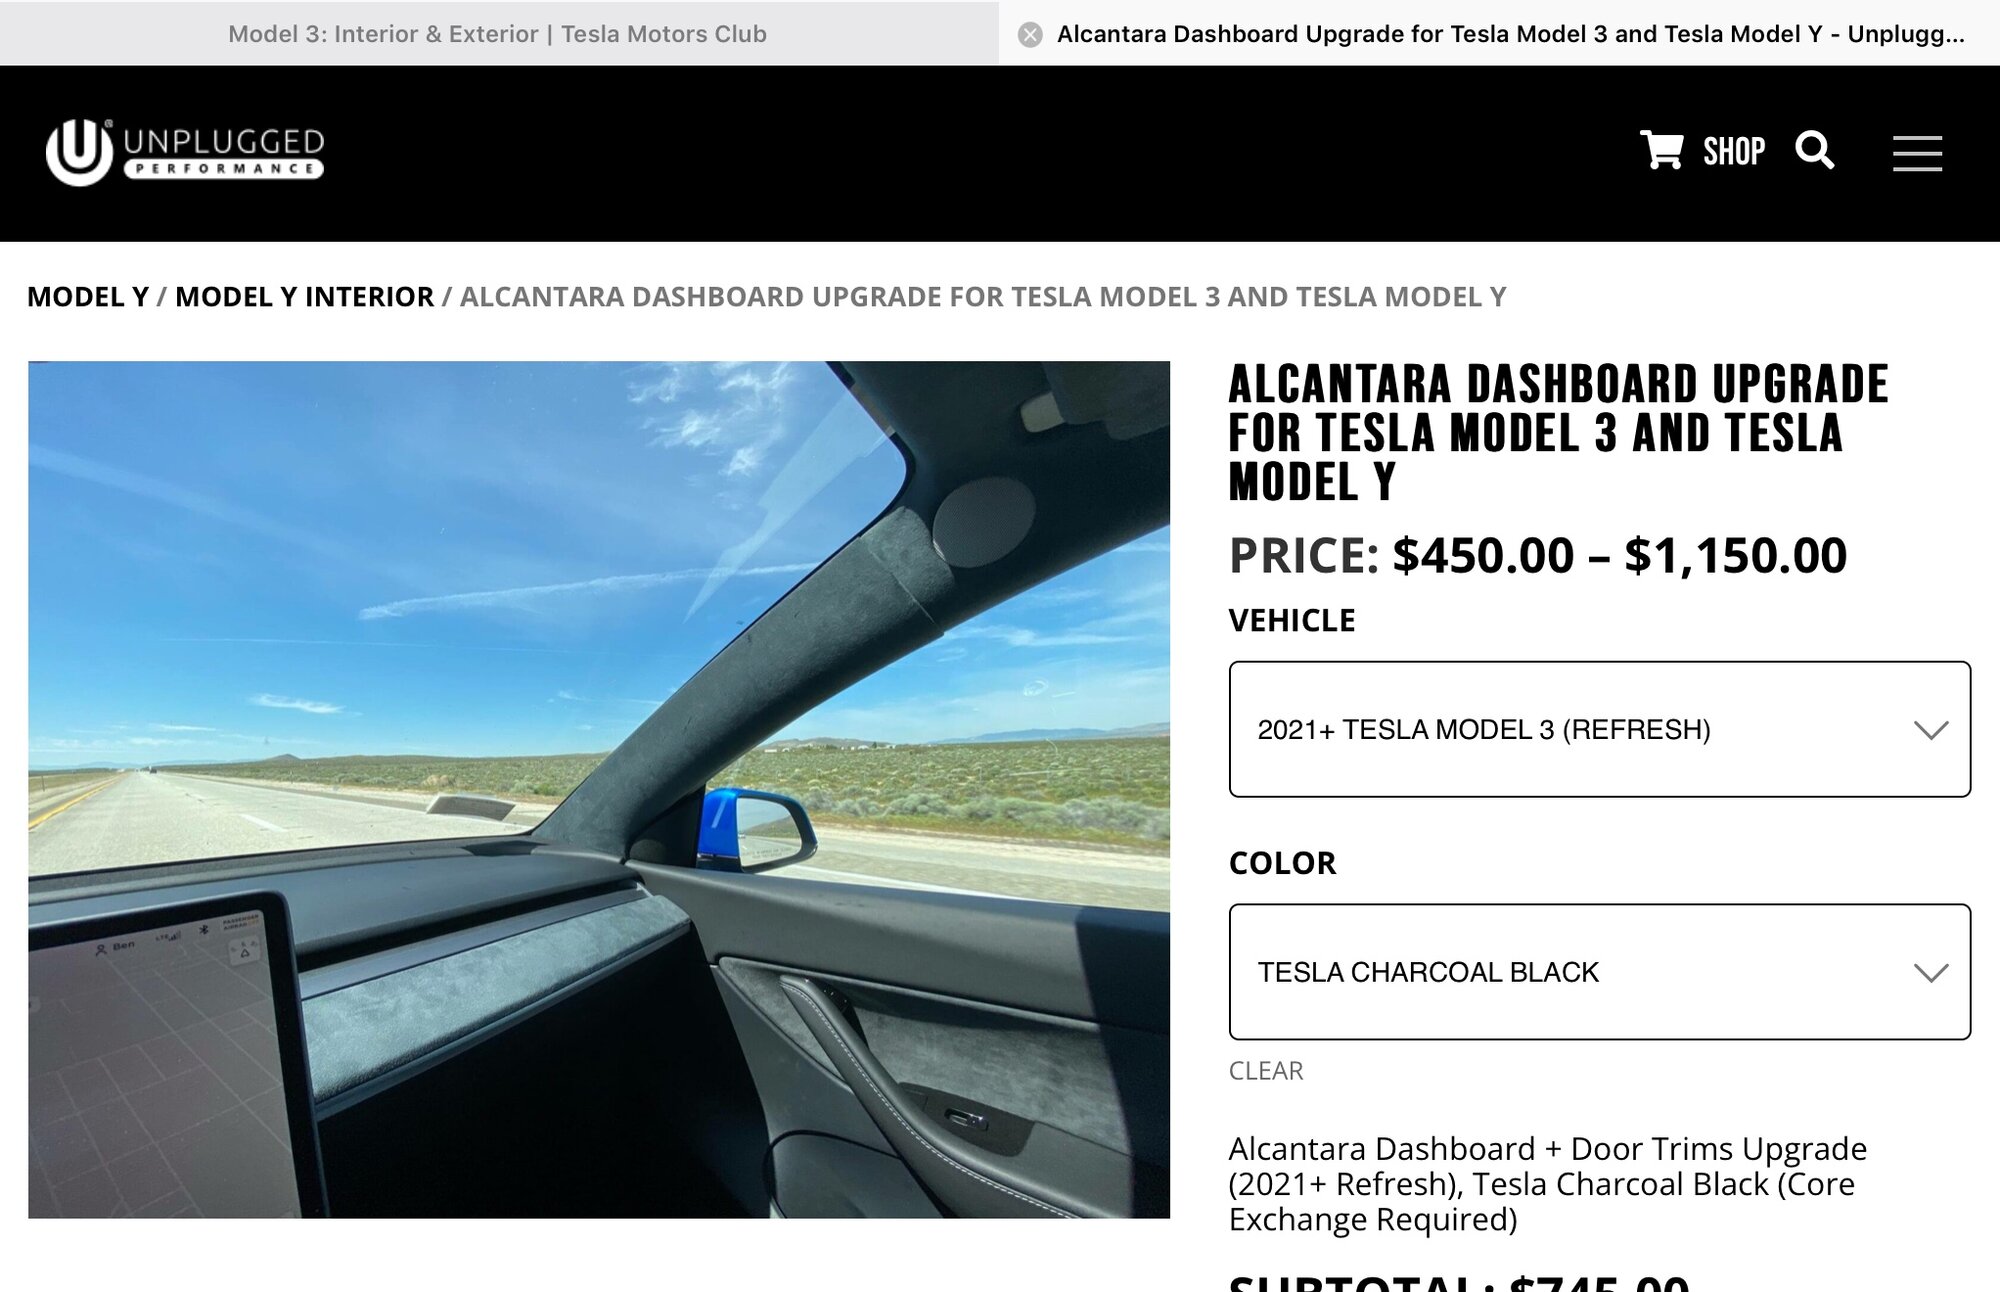 Tableau de bord en alcantara - Forum et Blog Tesla